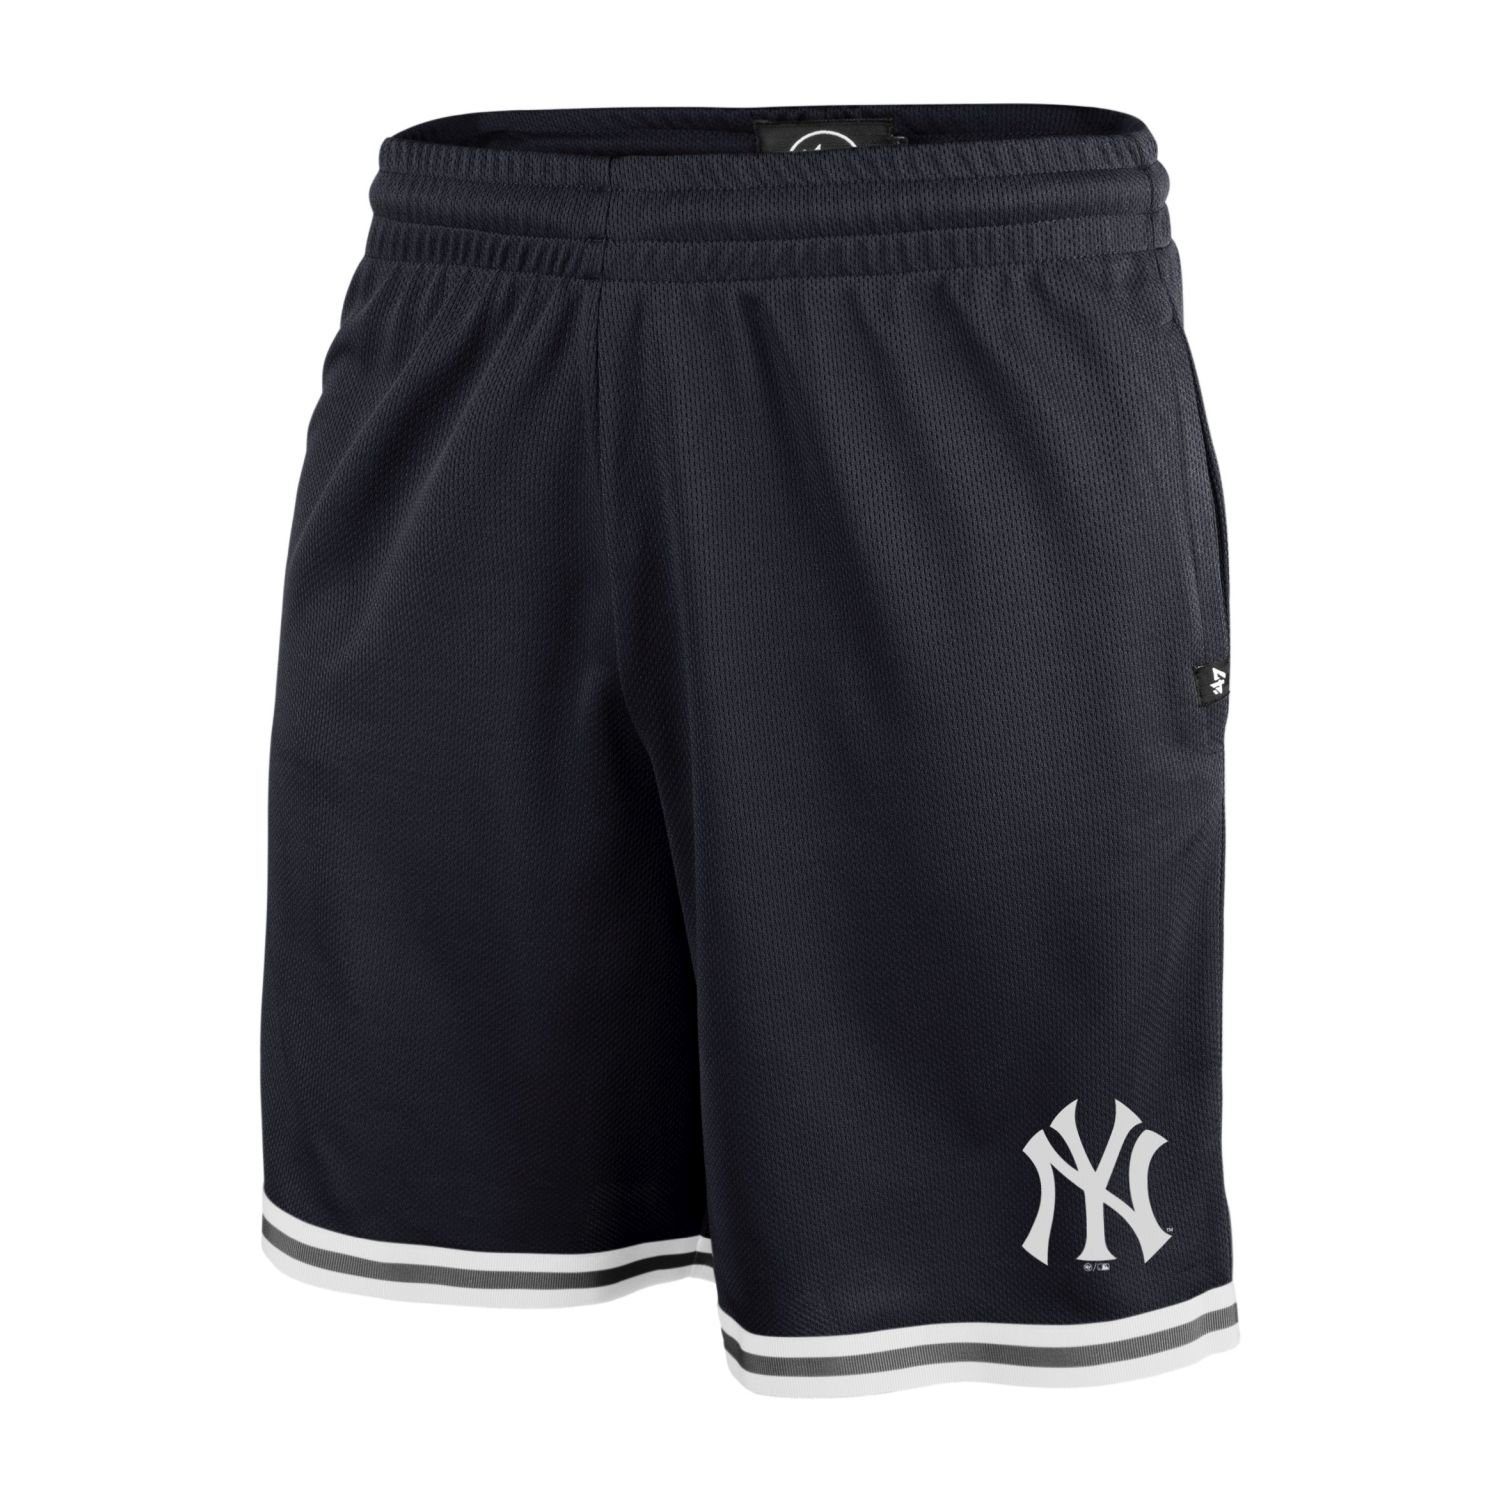 x27;47 Brand Shorts MLB Yankees New York GRAFTON